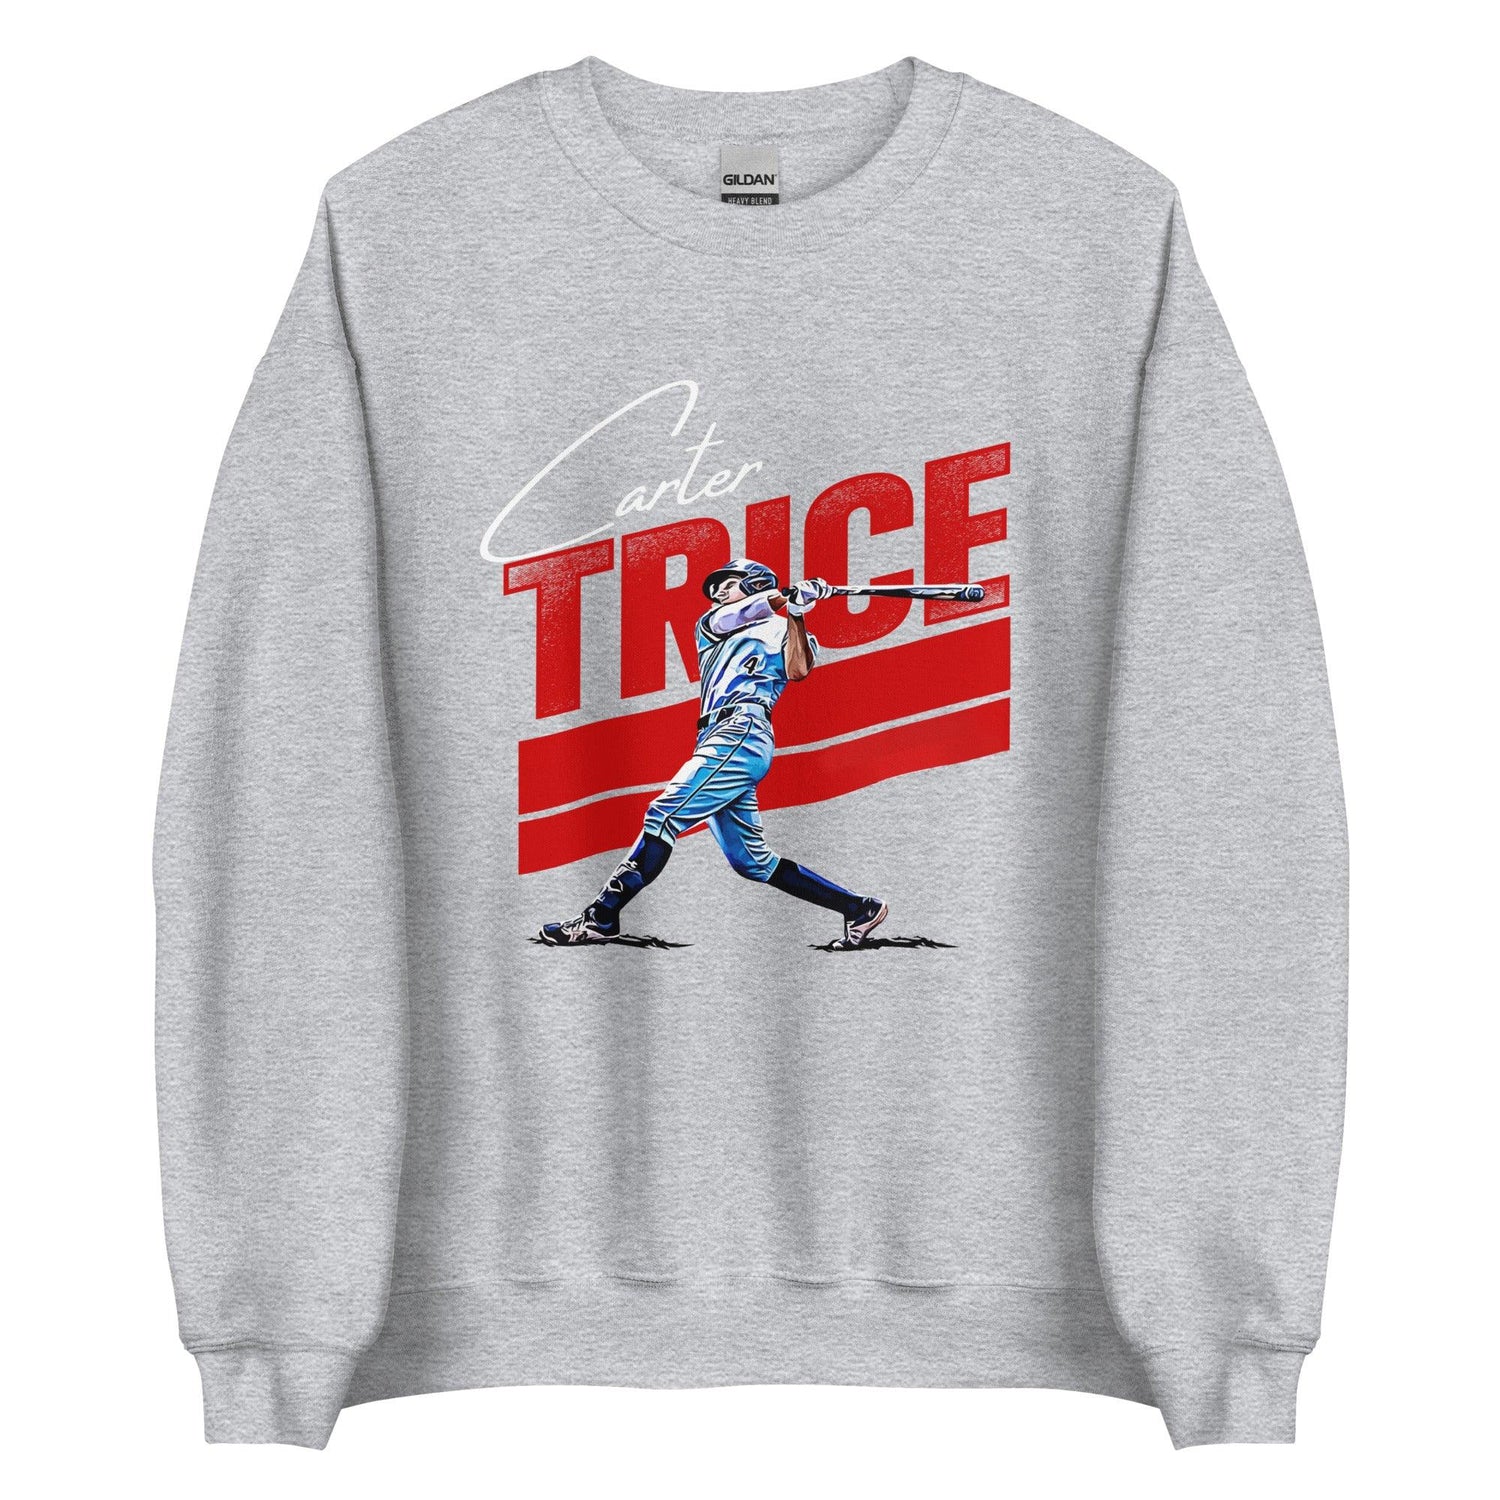 Carter Trice “Essential” Sweatshirt - Fan Arch